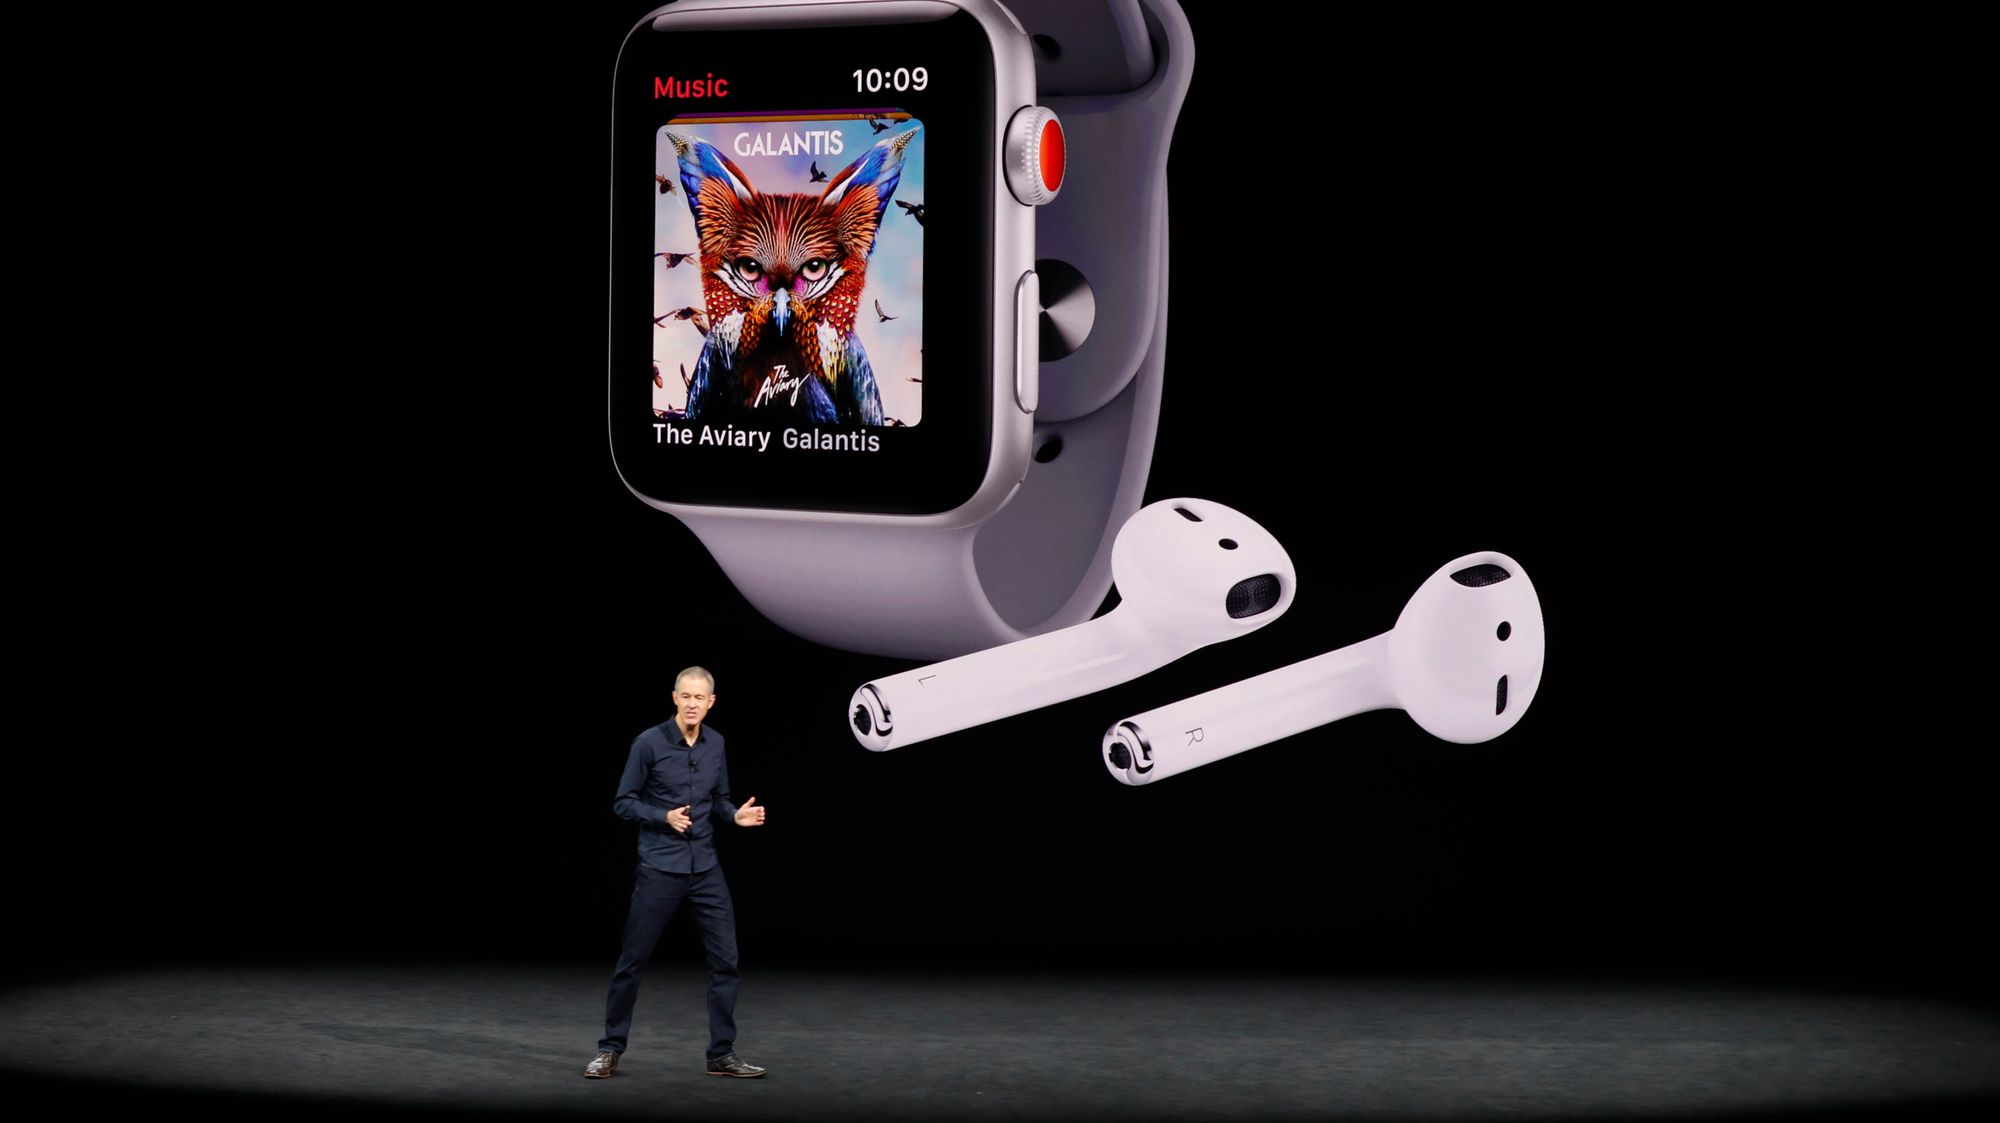 Apples nye smartklokke har innebygget 4G og måler pulsen kontinuerlig -  Digi.no